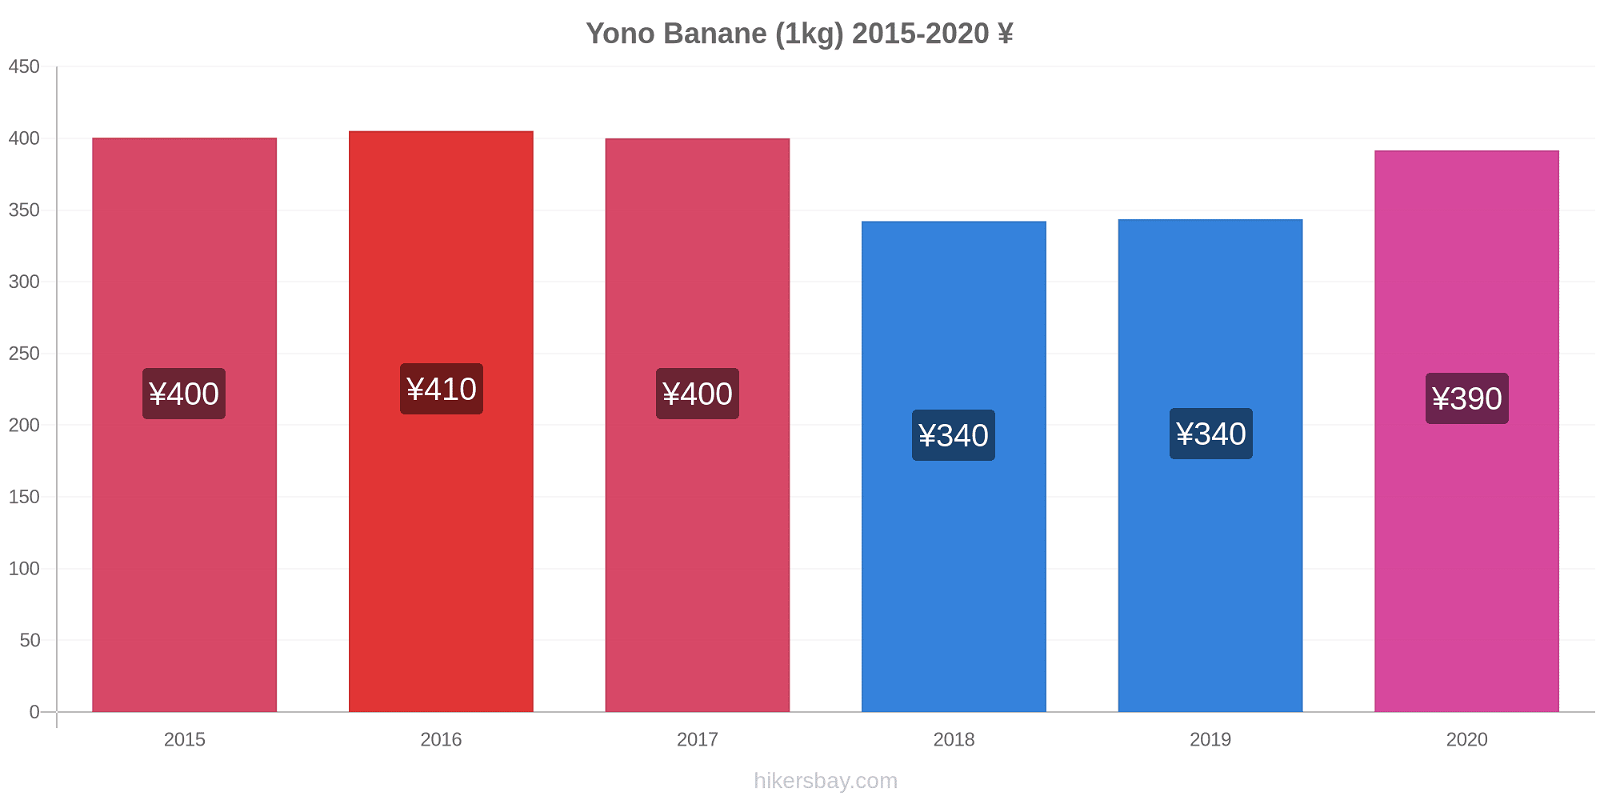 Yono variazioni di prezzo Banana (1kg) hikersbay.com